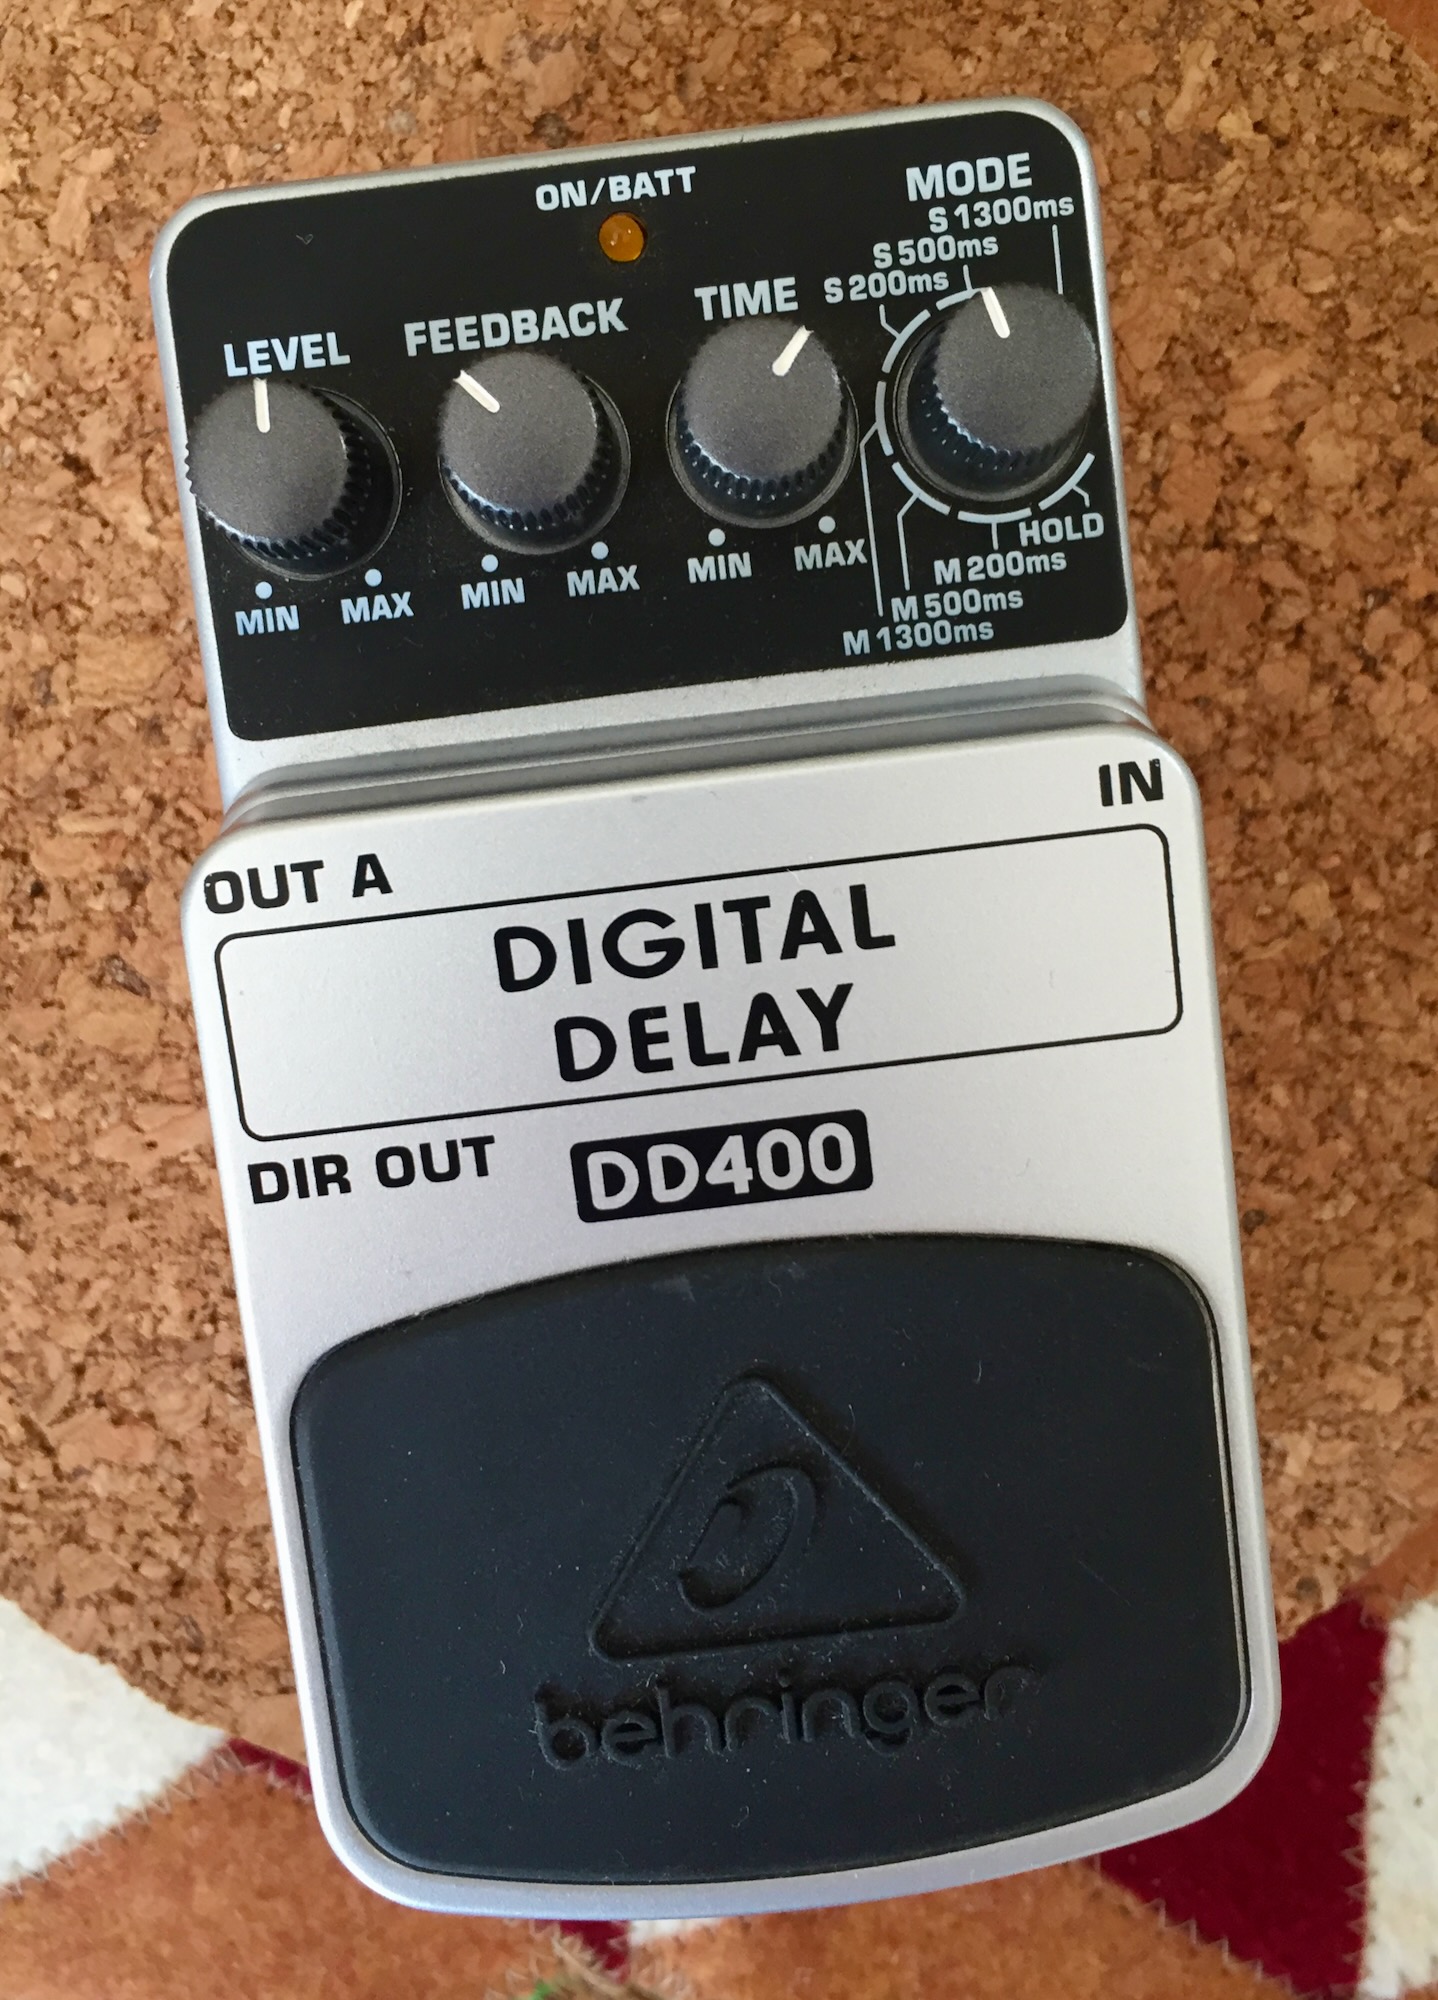 A typical digital delay pedal